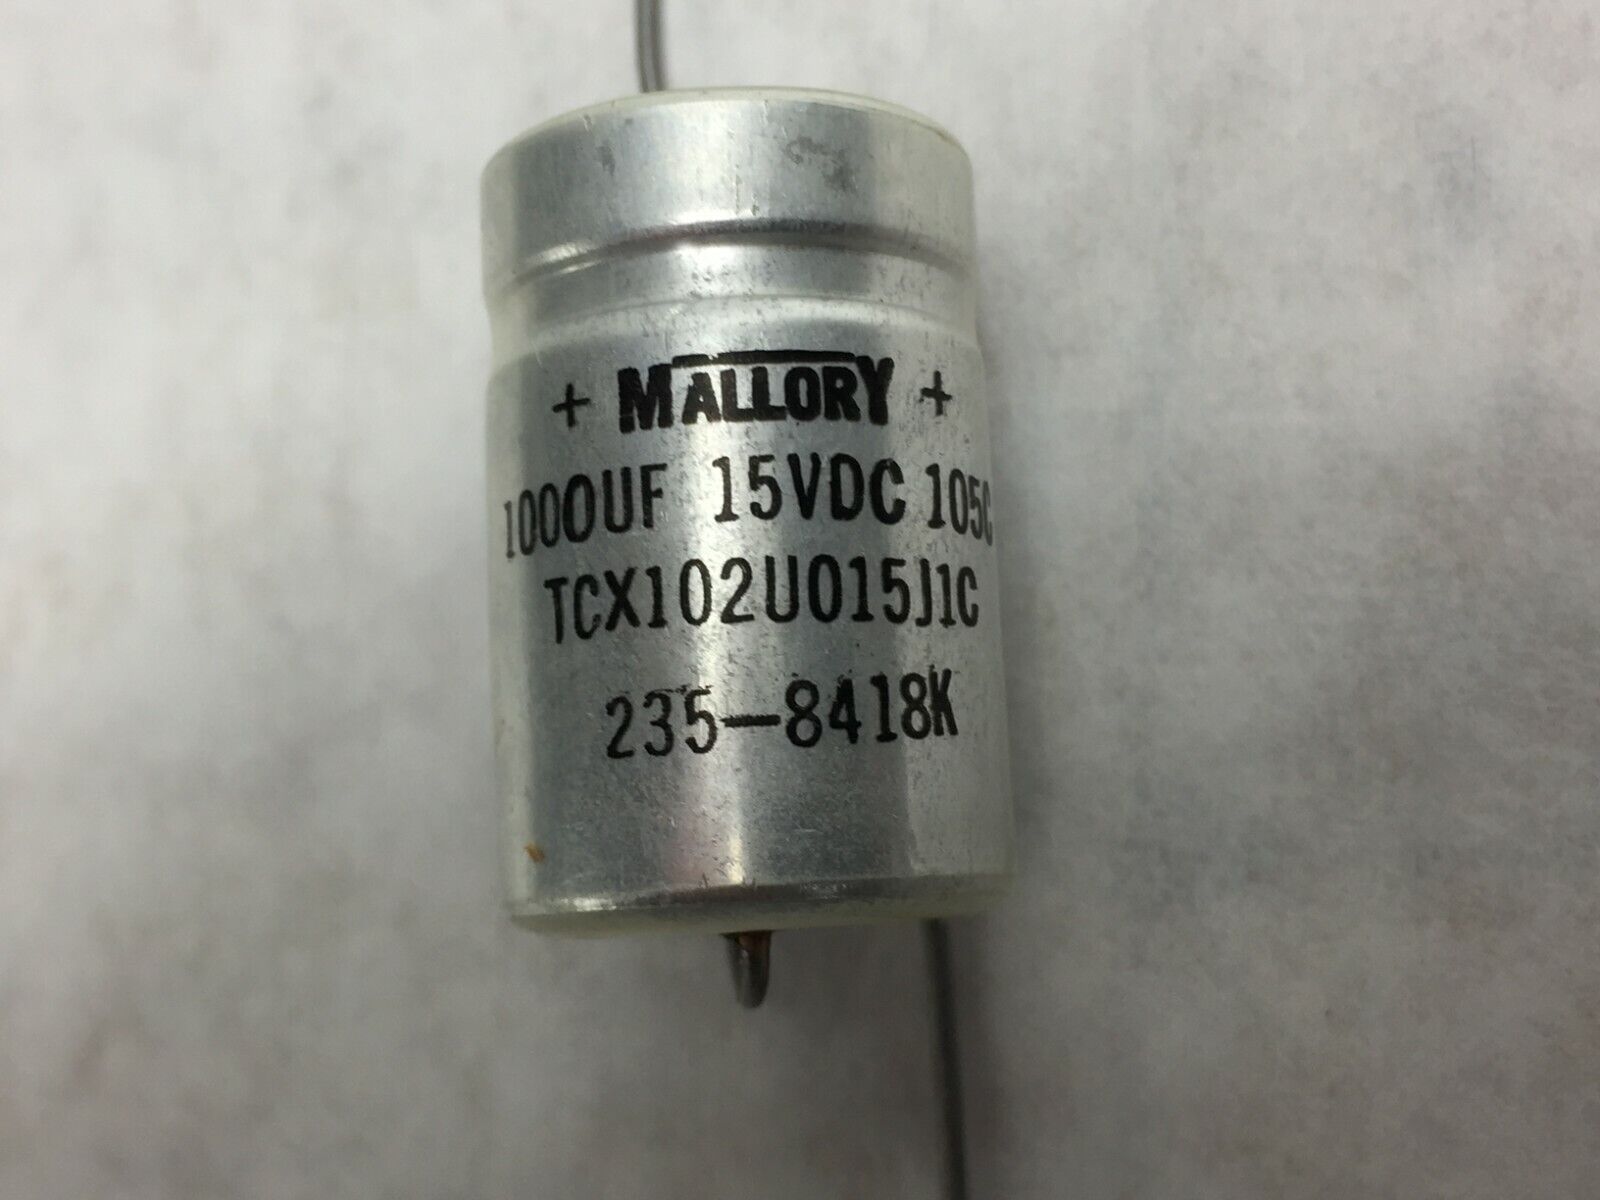 NOS Mallory Capacitor TCX102U015J1C  1000uF 15VDC   Lot of 5